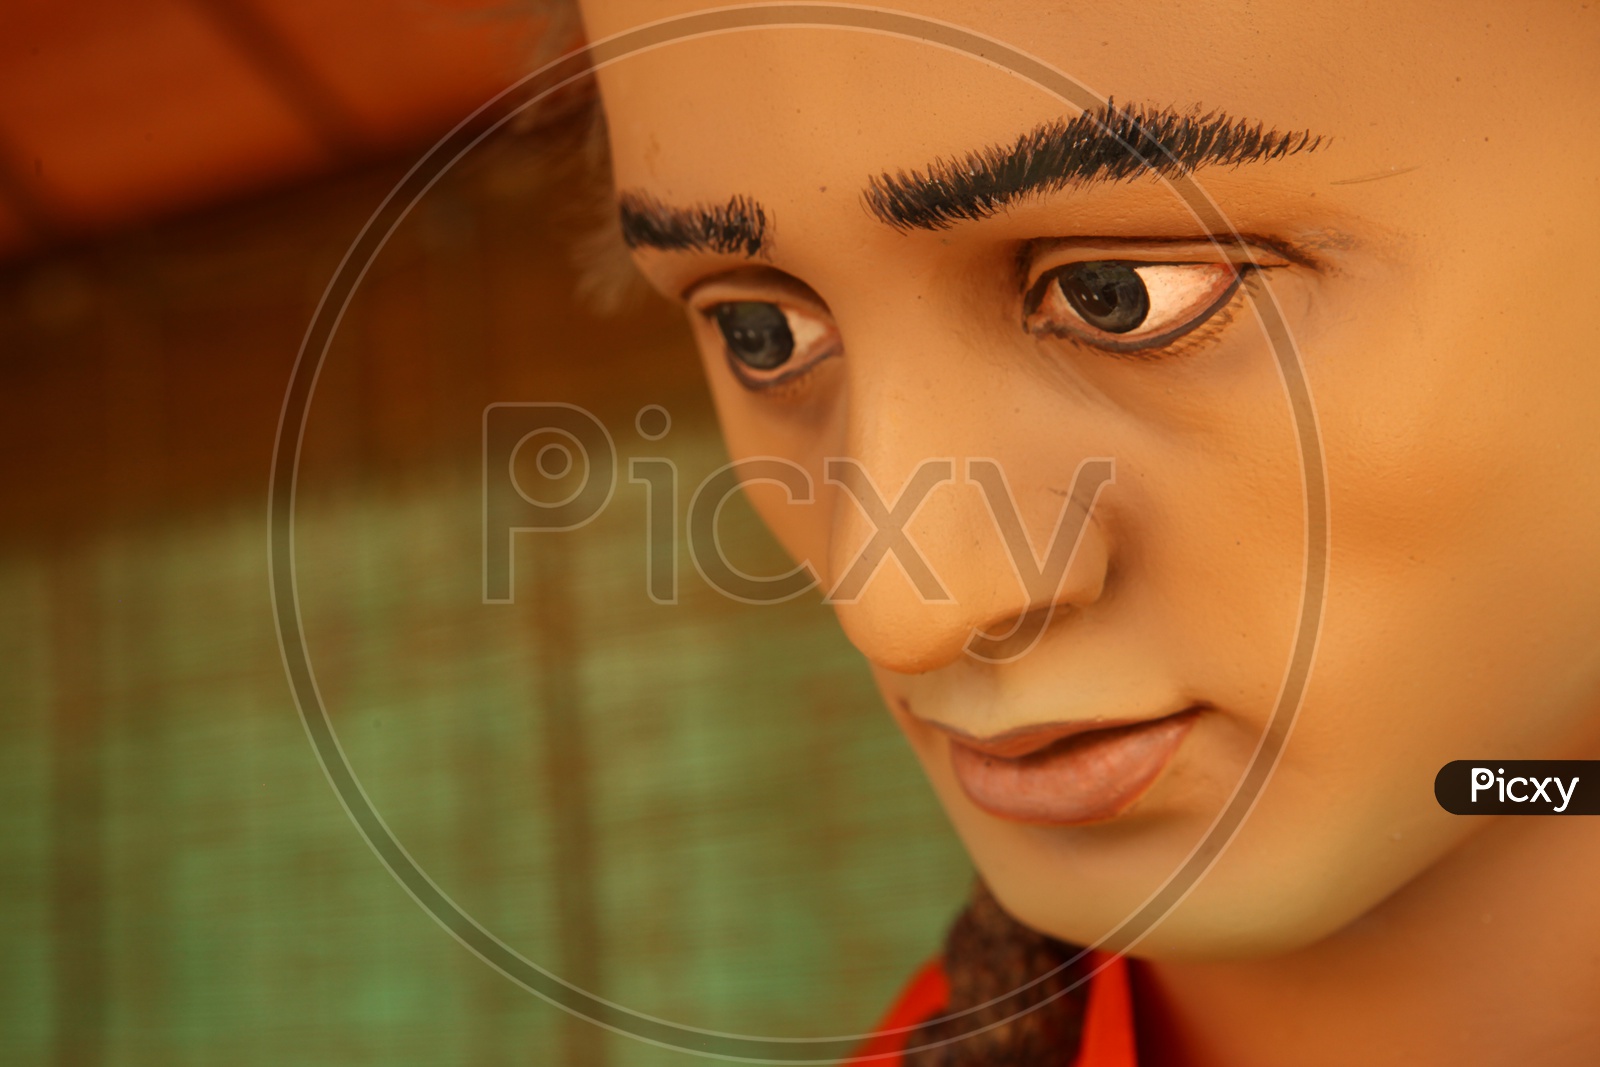 A Male Mannequin's face